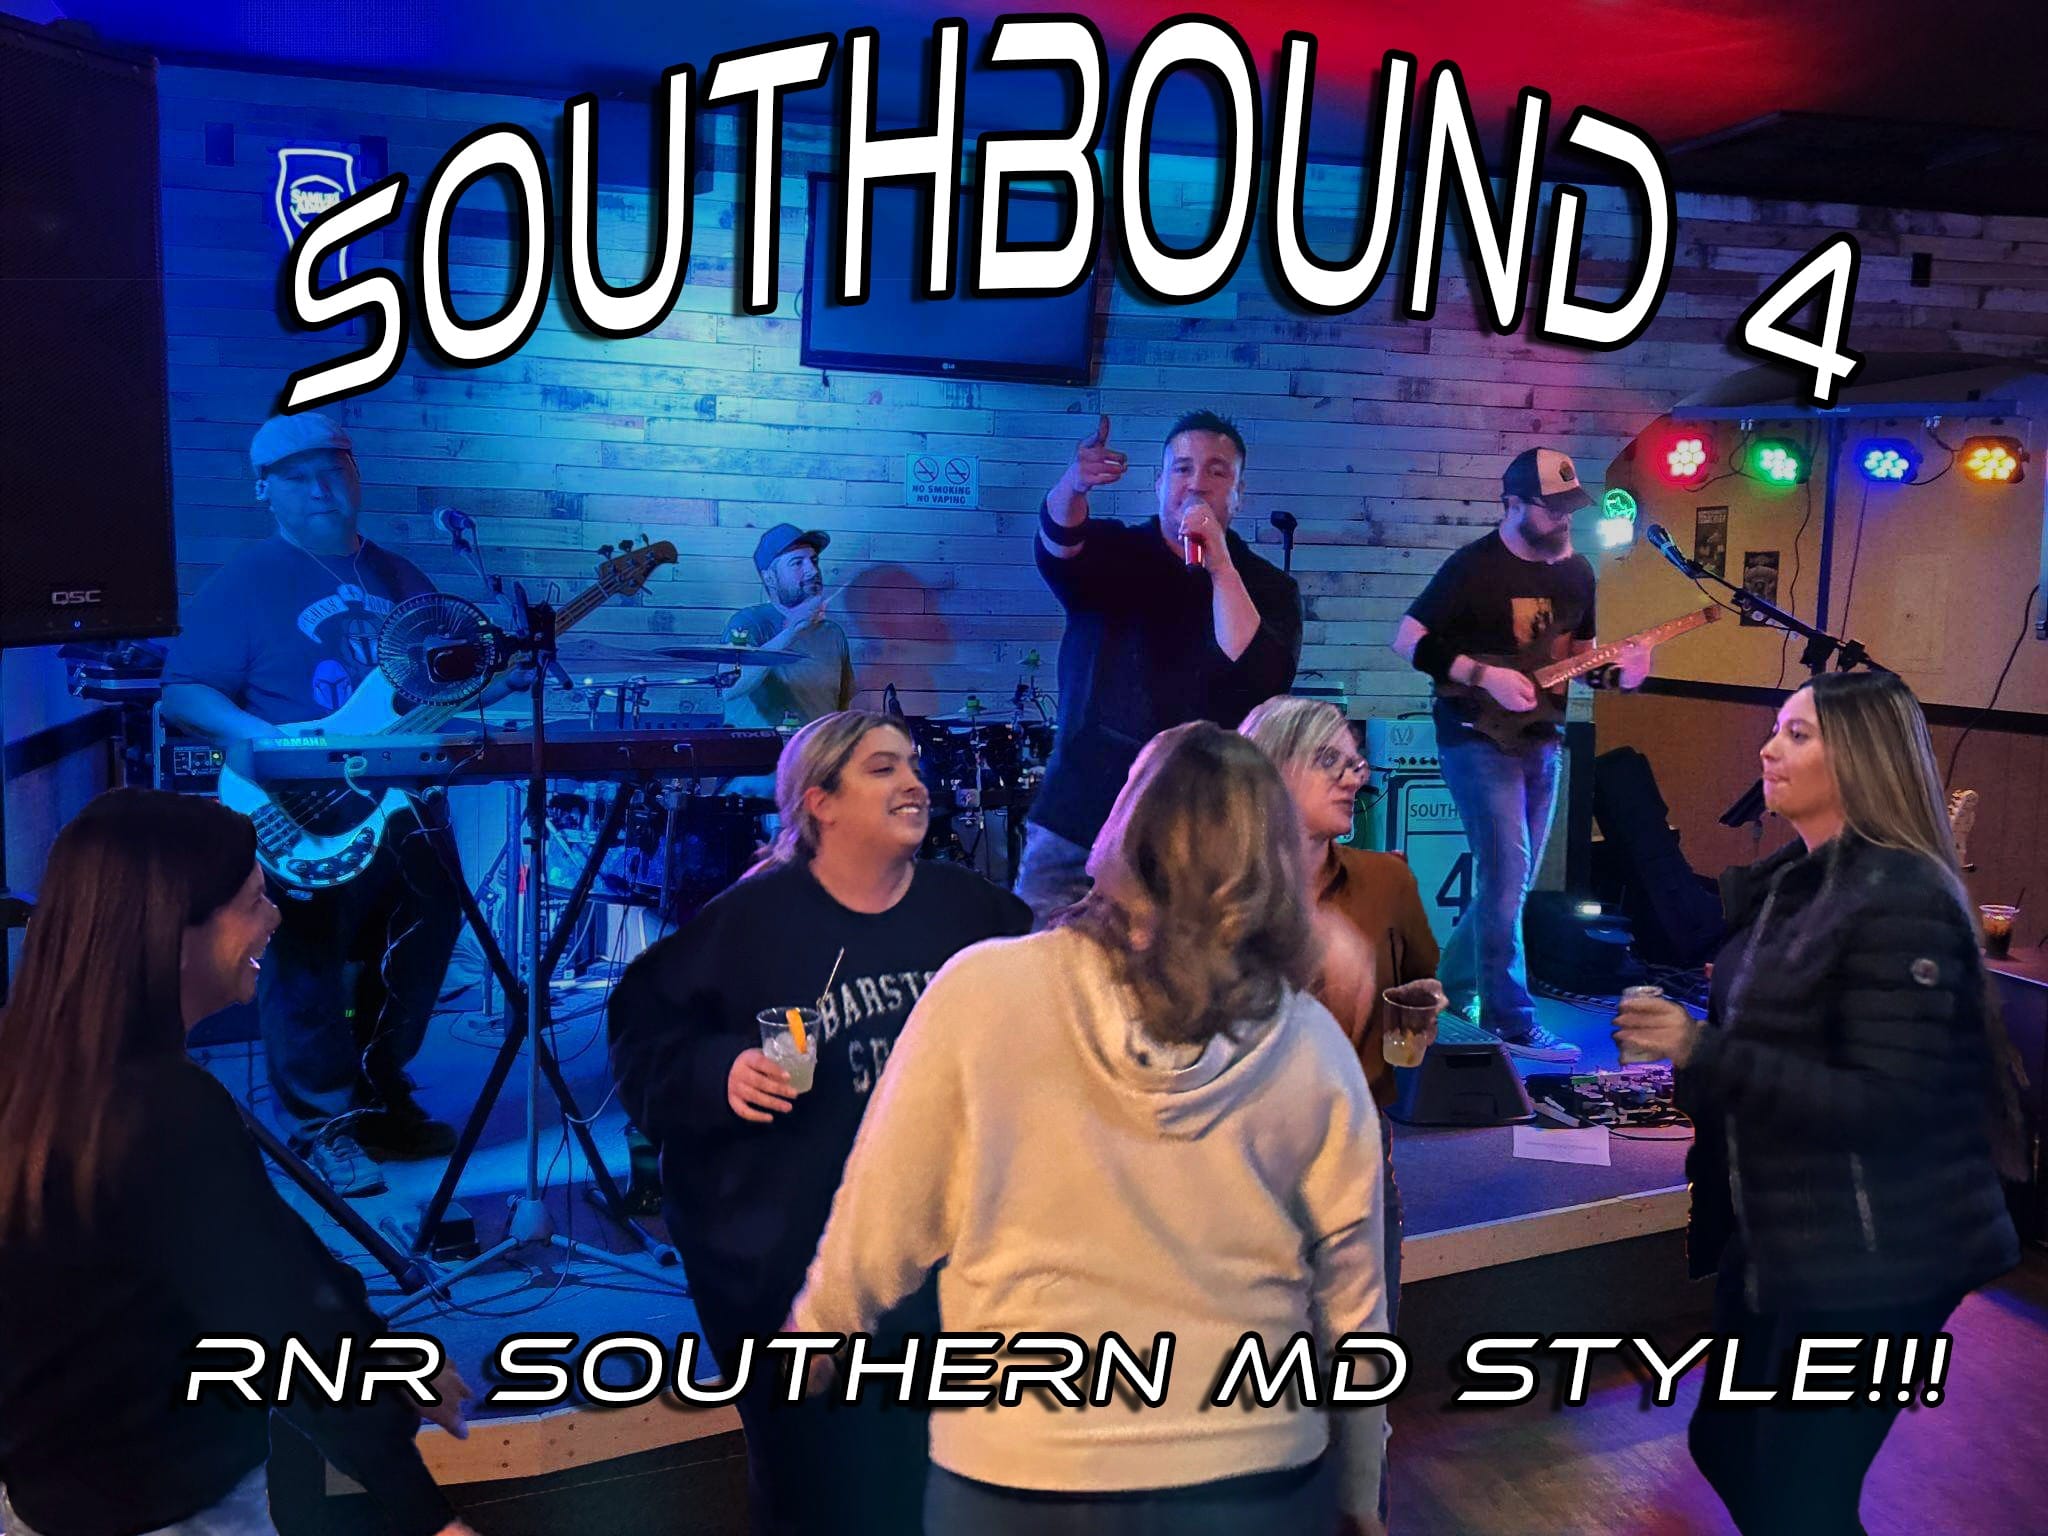 SouthBound 4 gig photo